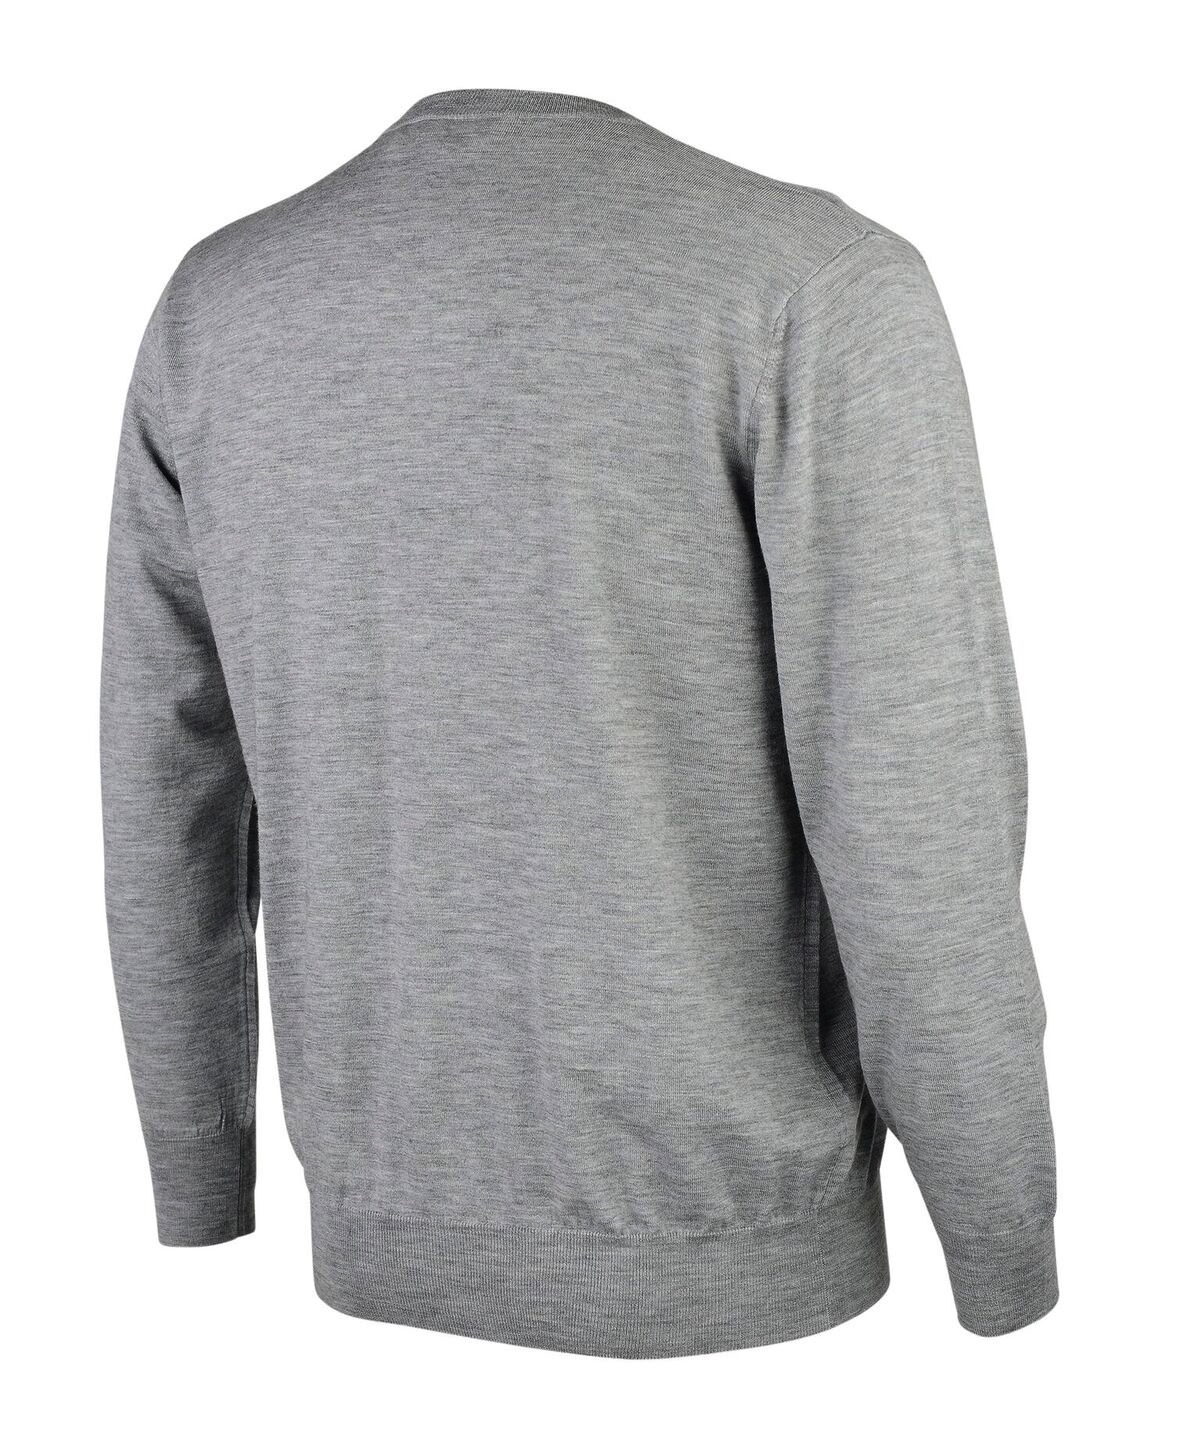 Sydney Alpaca V-Neck Sweater - Light Grey - 2